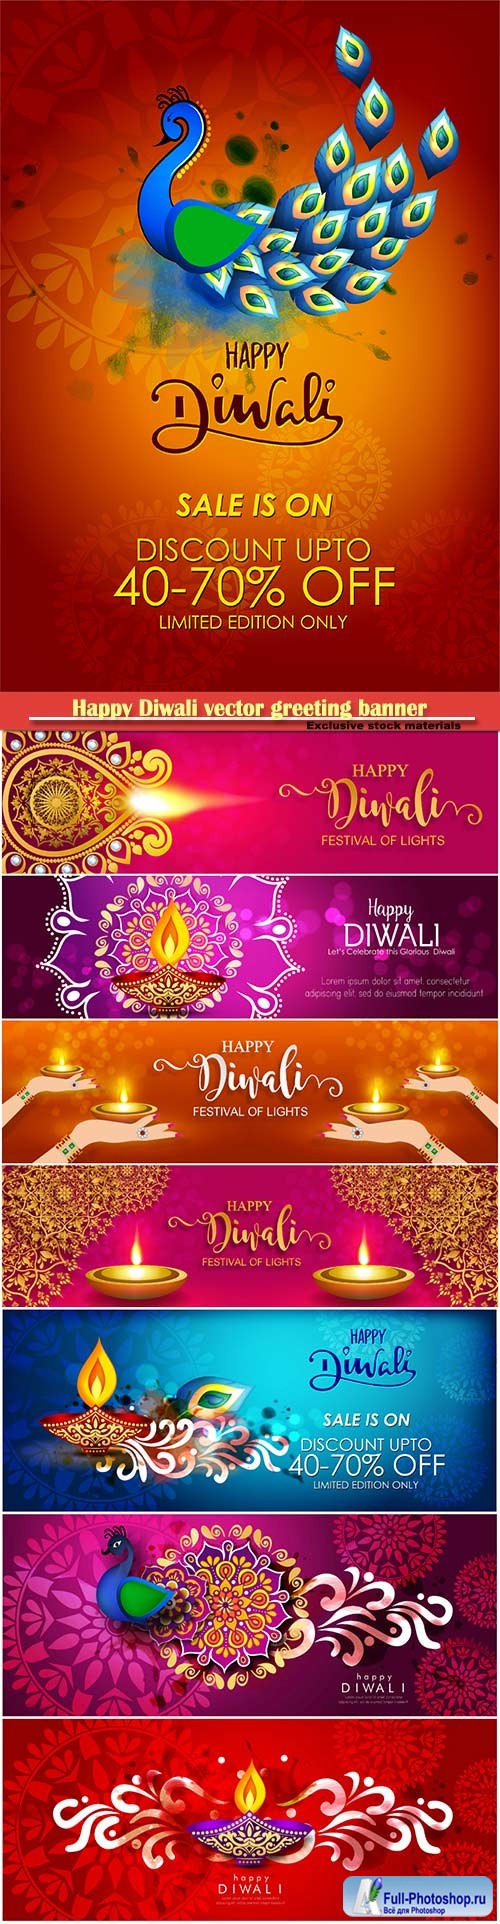 Happy Diwali vector greeting banner design